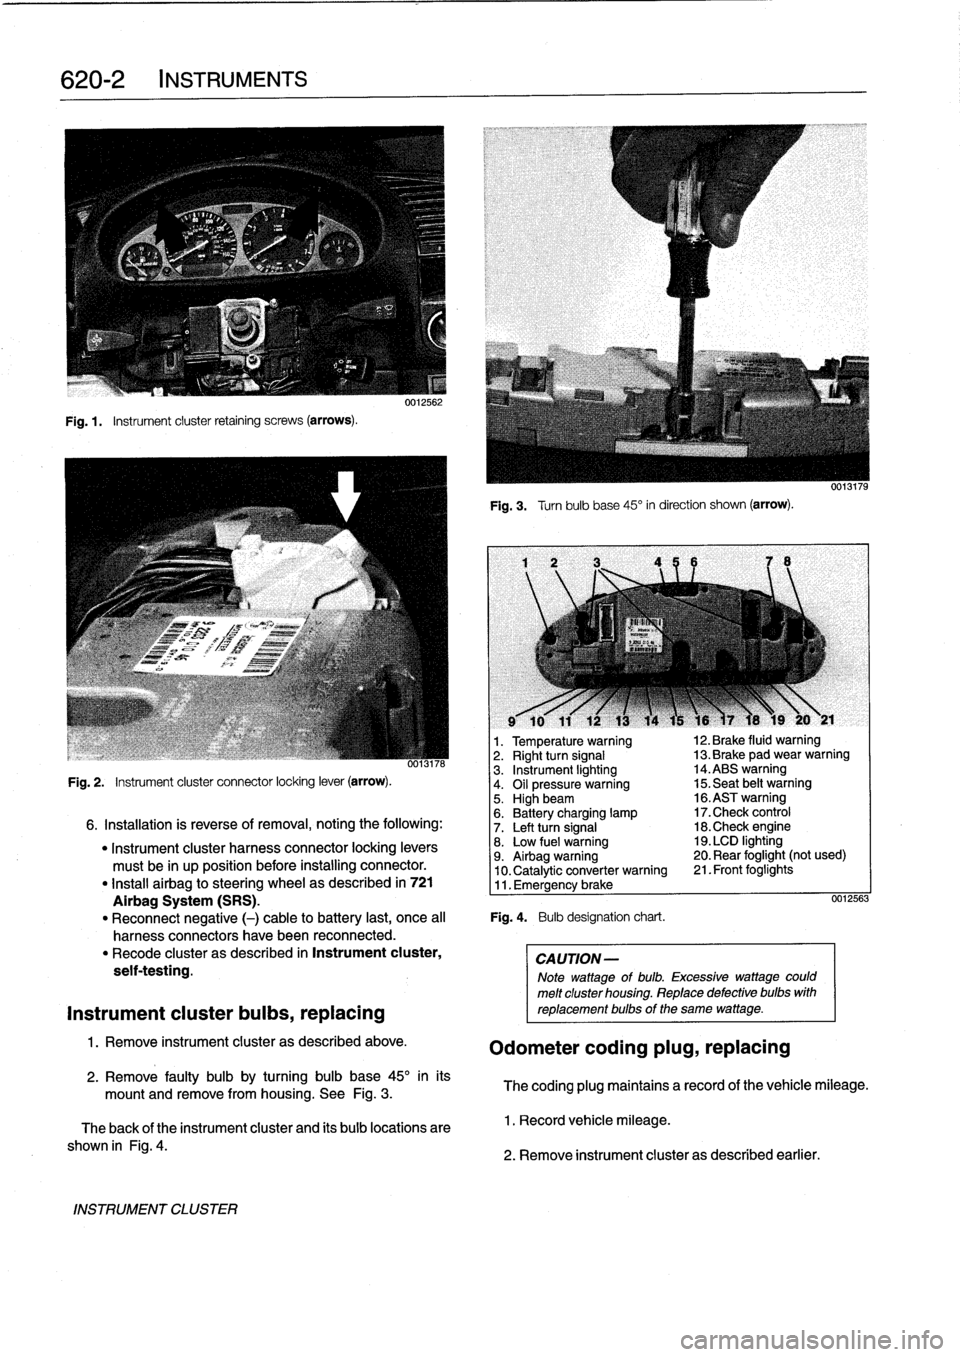 BMW 328i 1993 E36 Workshop Manual 
620-2
INSTRUMENTS

Fig
.1.

	

Instrument
cluster
retaining
screws
(arrows)
.

INSTRUMENT
CLUSTER

0012562

Fig
.
3
.

	

Turnbulb
base
45°
in
direction
shown
(arrow)
.

l
v

	

w
r
v
9

	

10

	

1